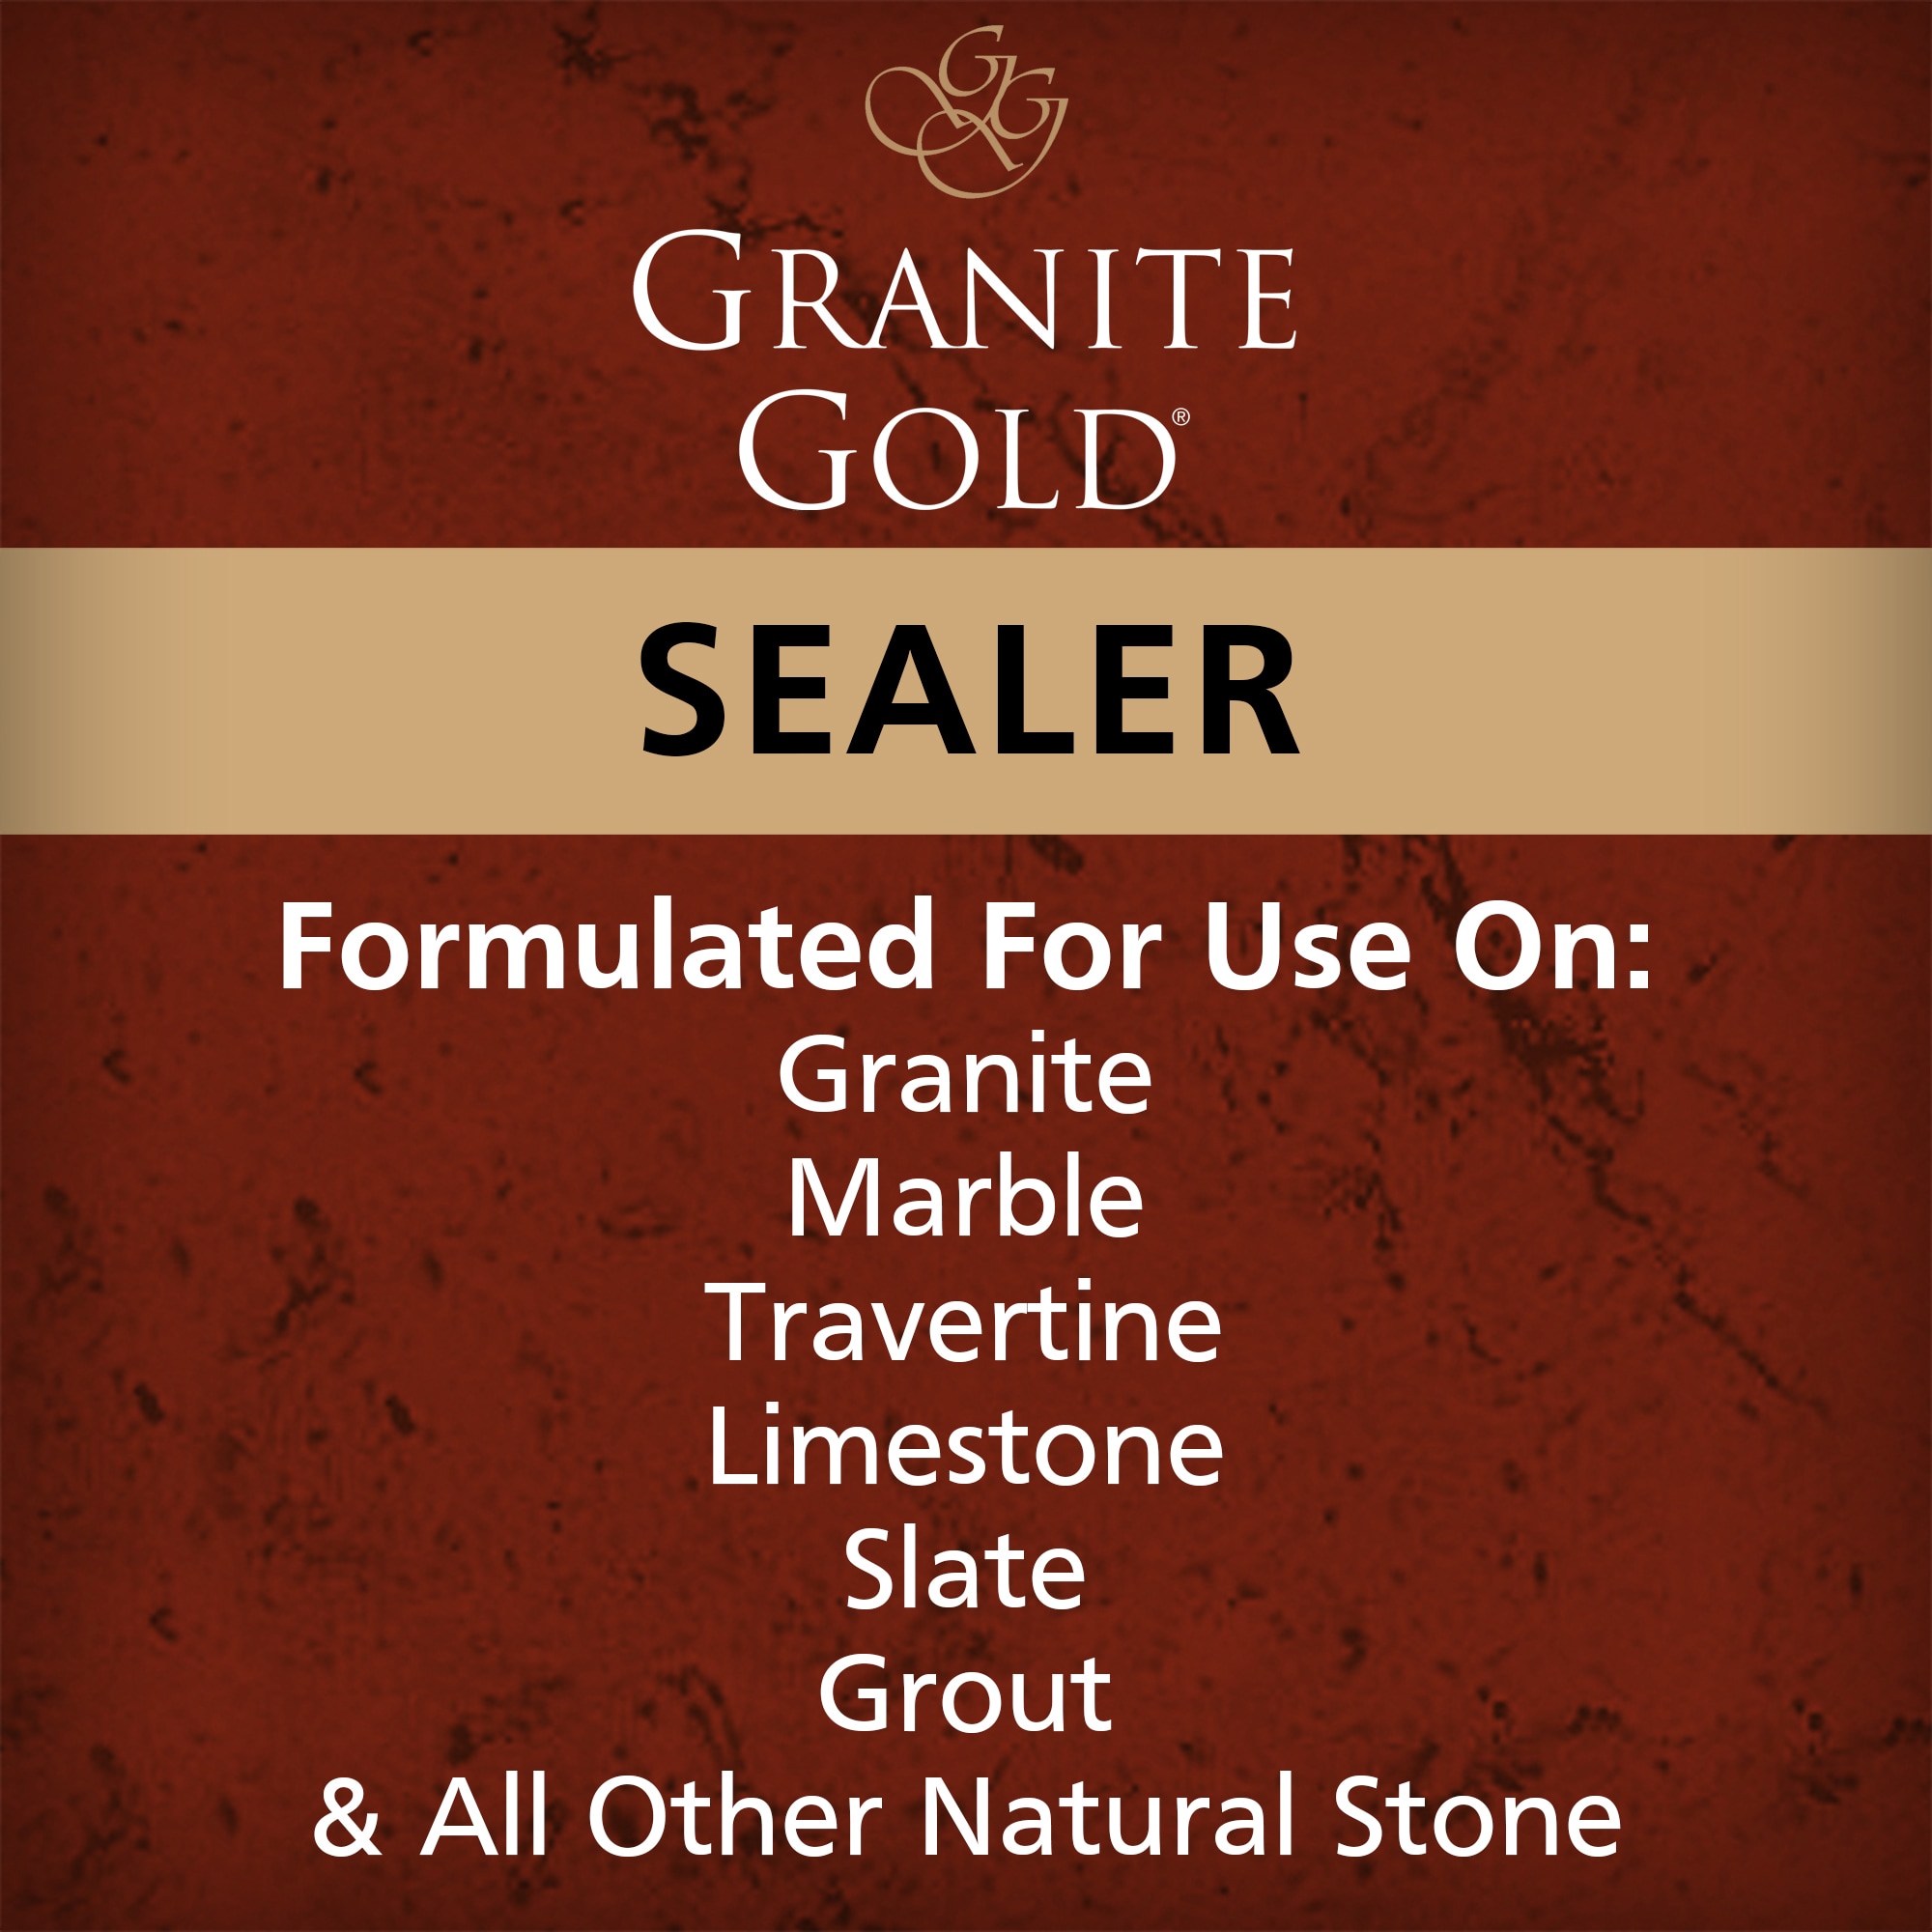 Granite Gold Countertop Protection Plan at Lowe's